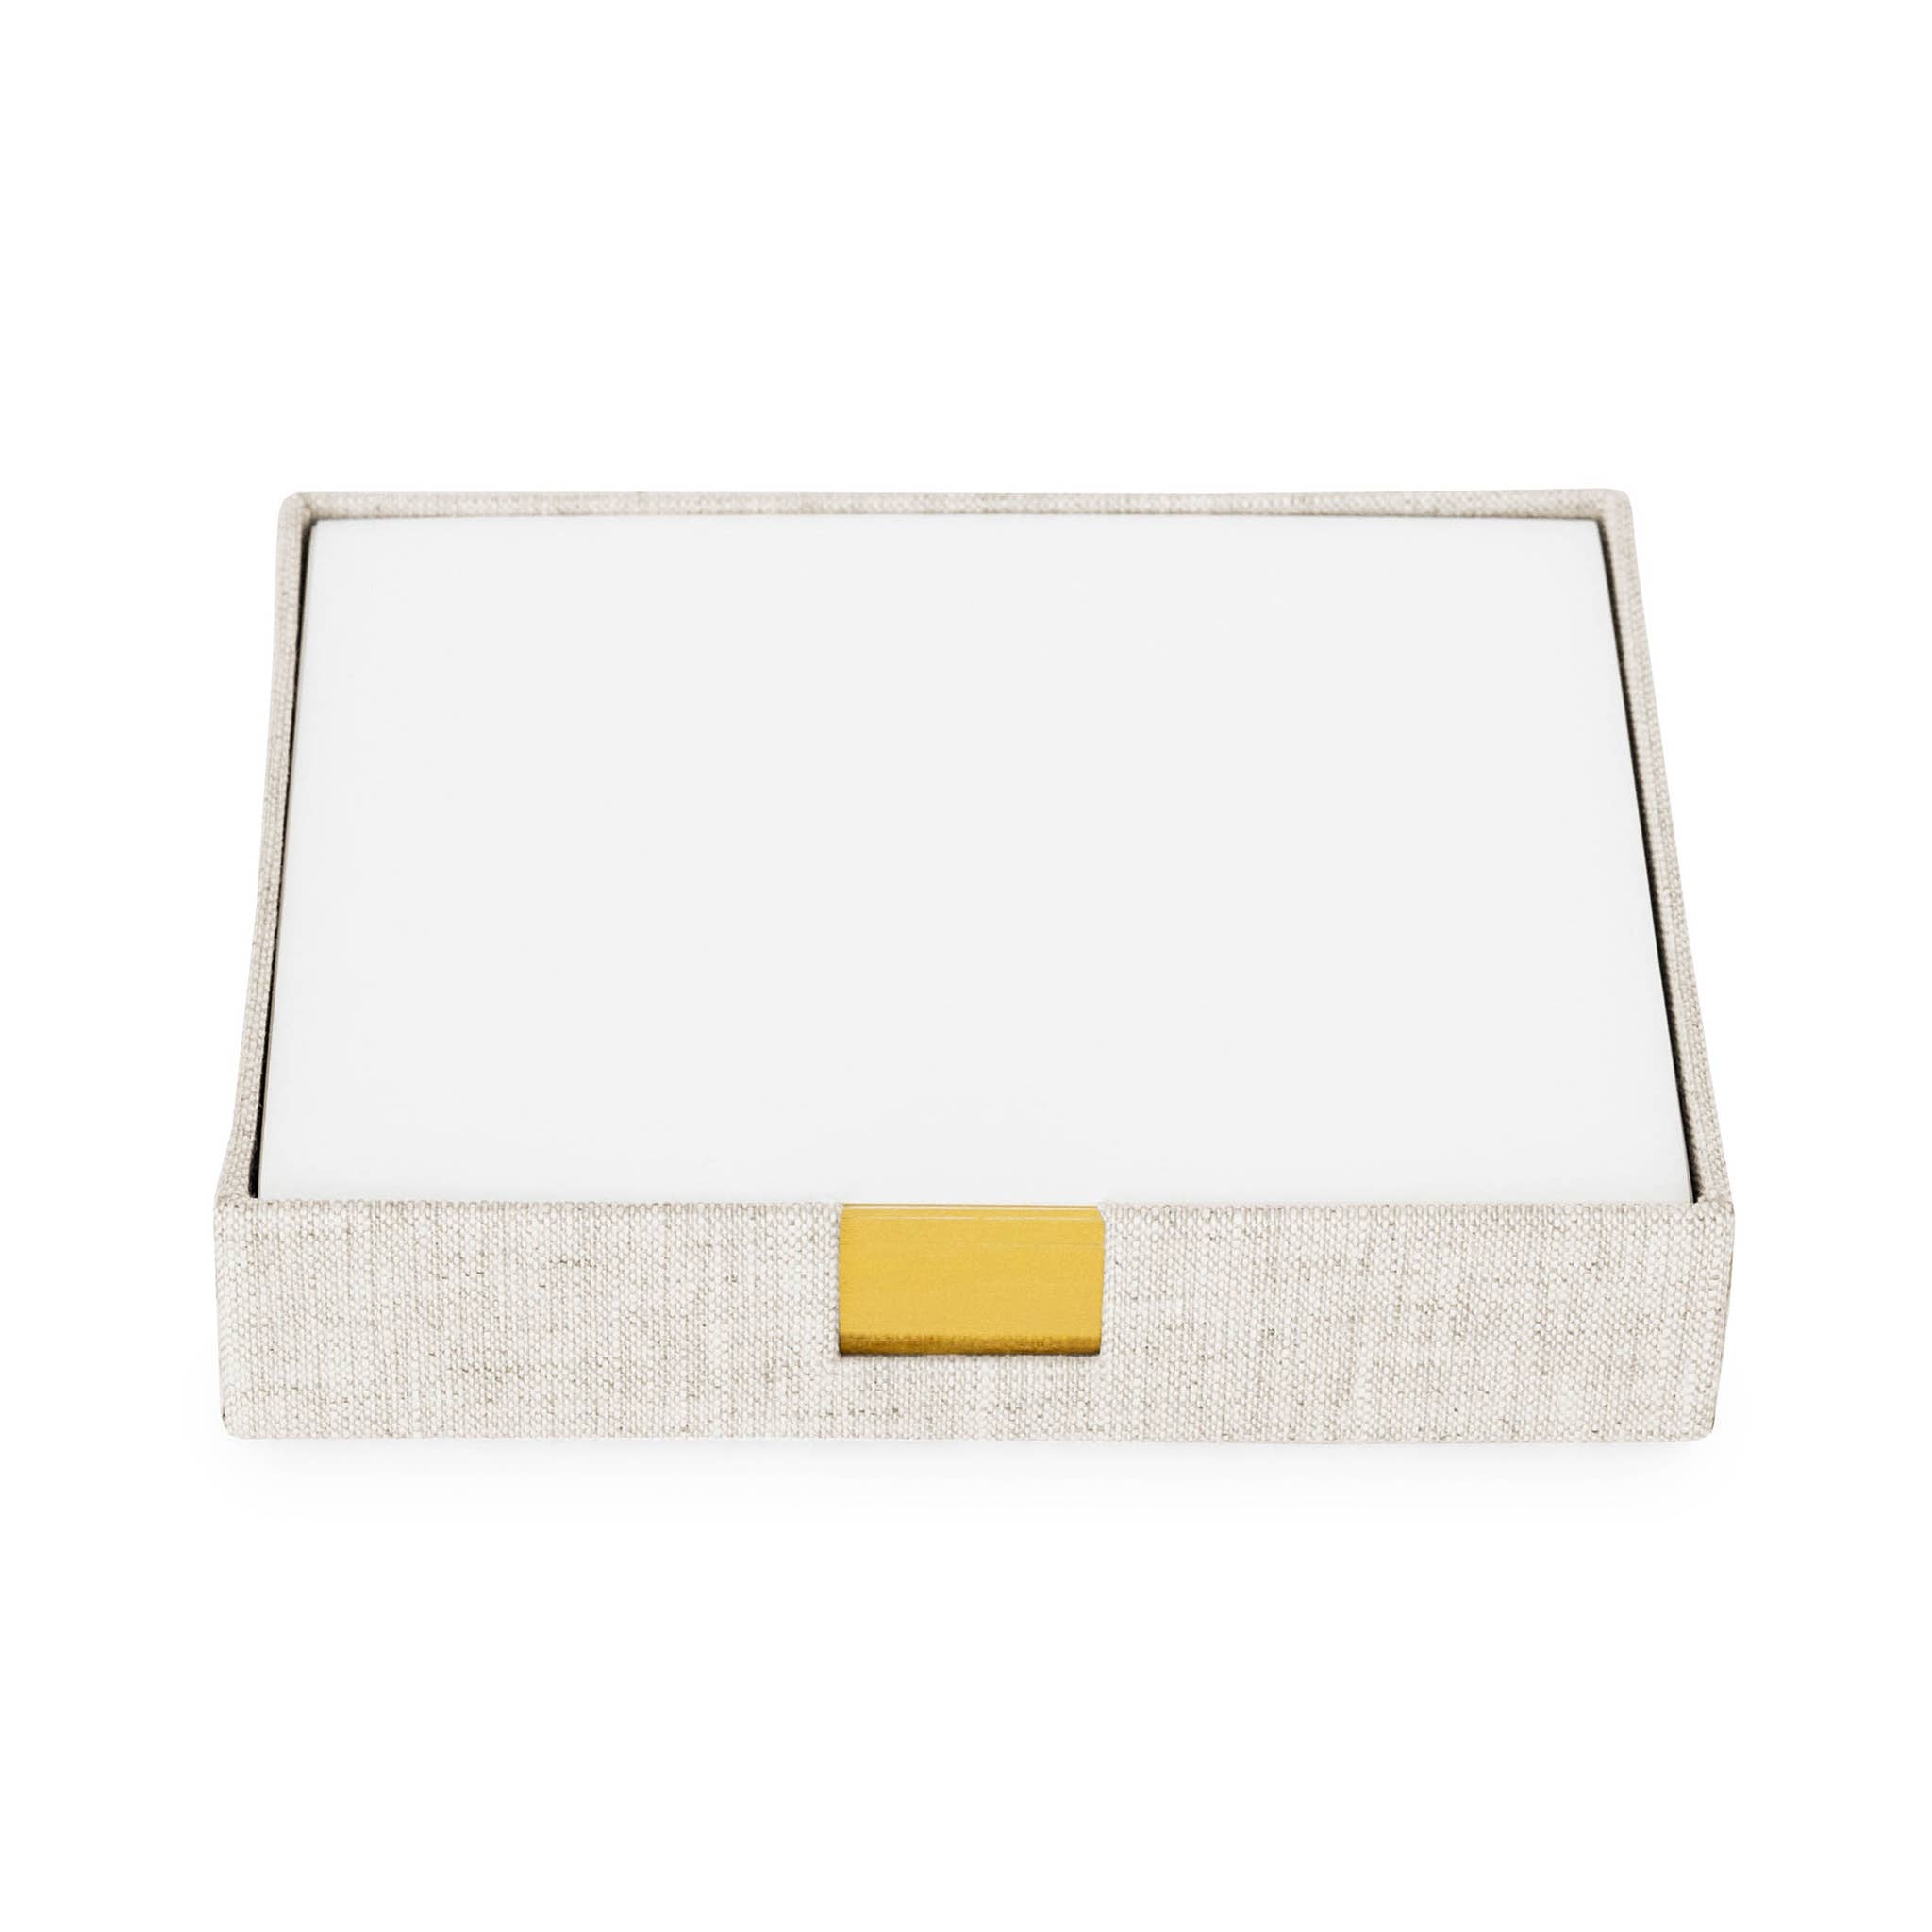 Blank White Desk Jotter with Gold Foil Label